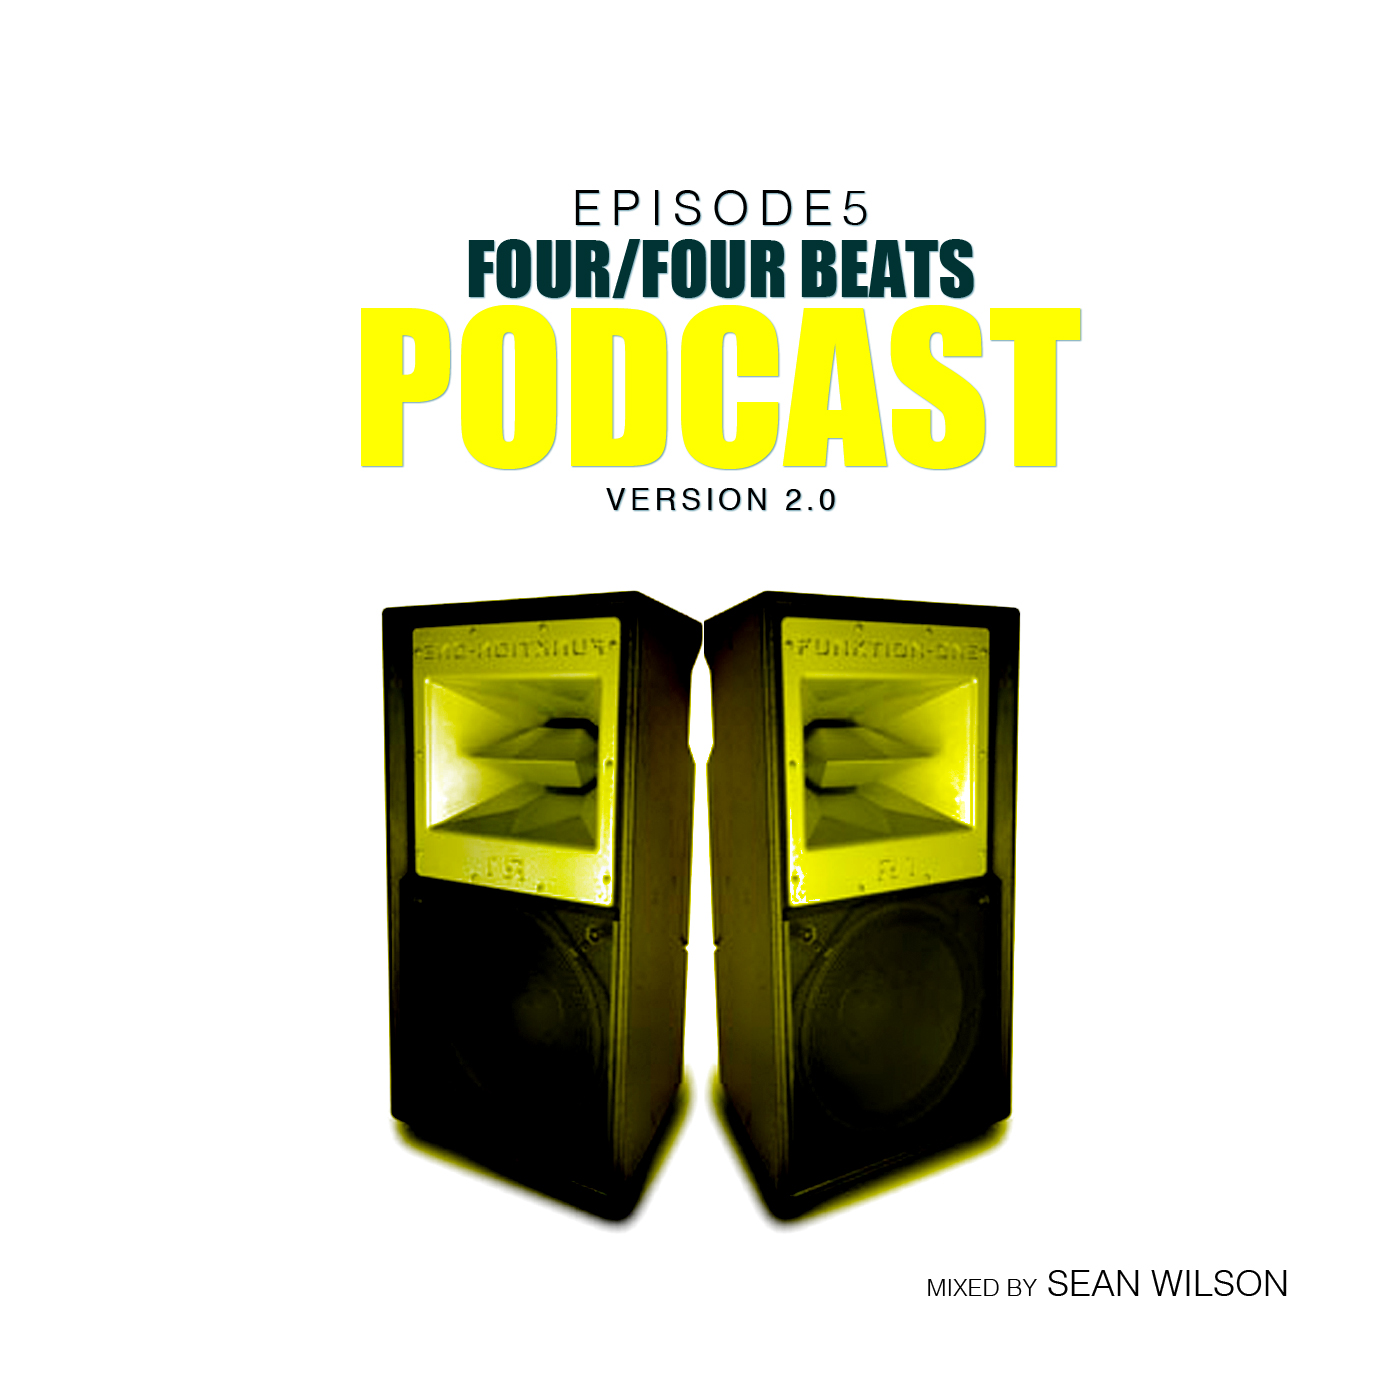 Episode 5 - Mixed By Sean Wilson